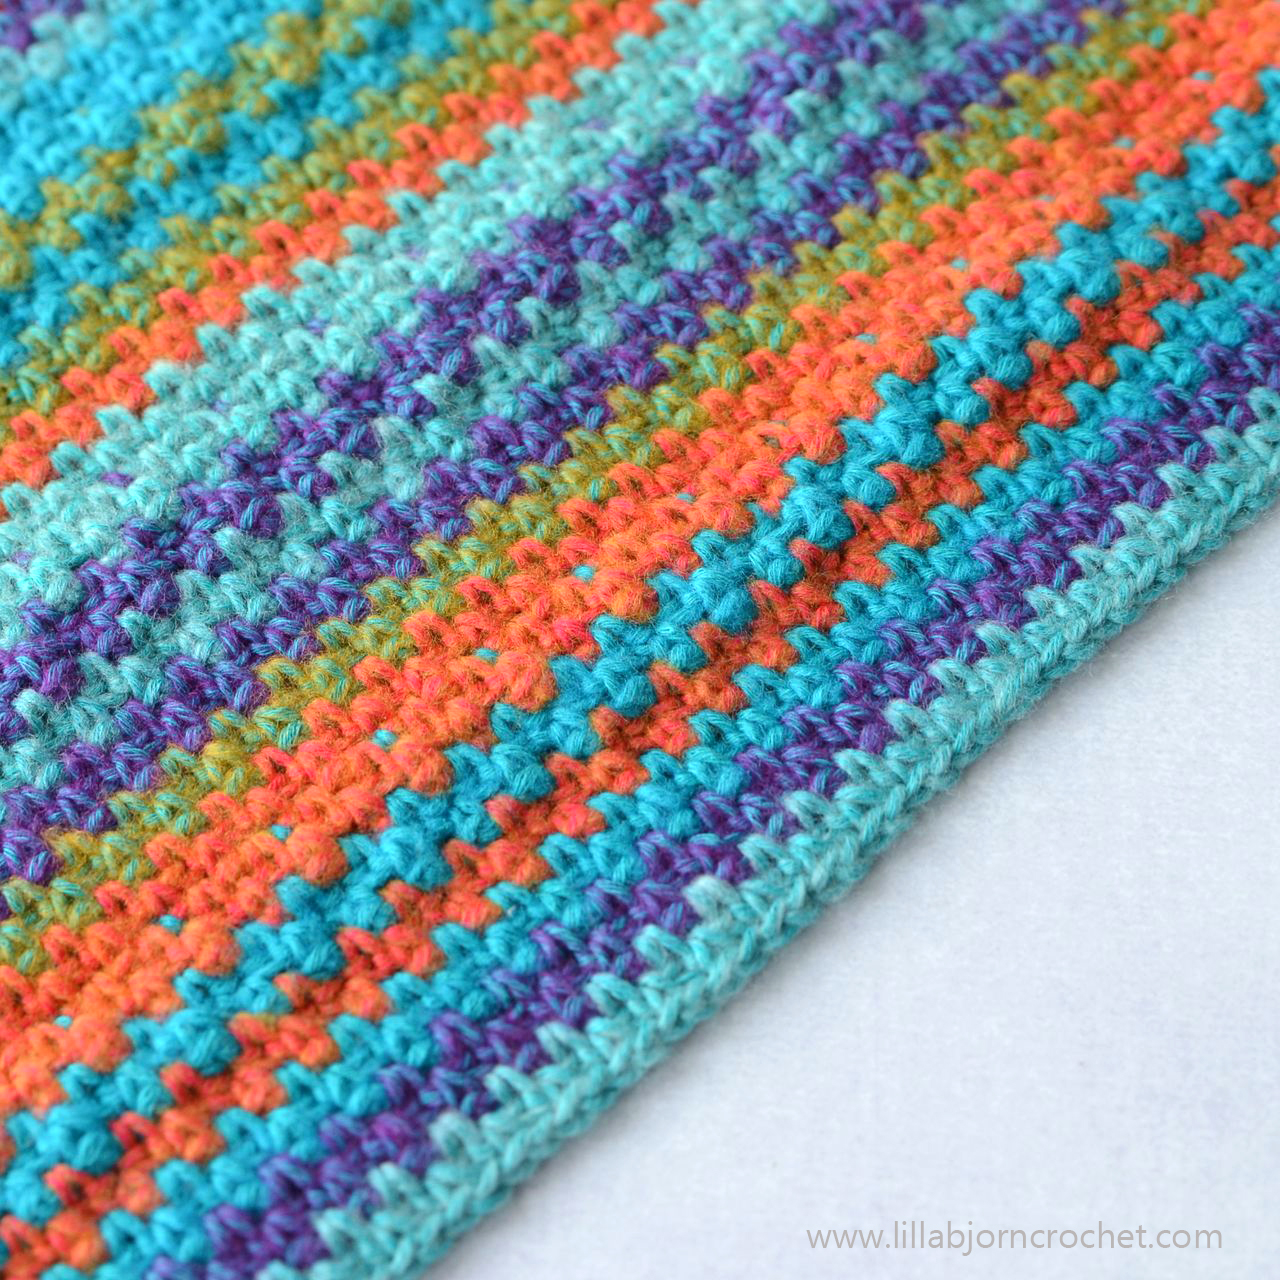 Crochet shawl with linen stitch - free pattern by www.lillabjorncrochet.com